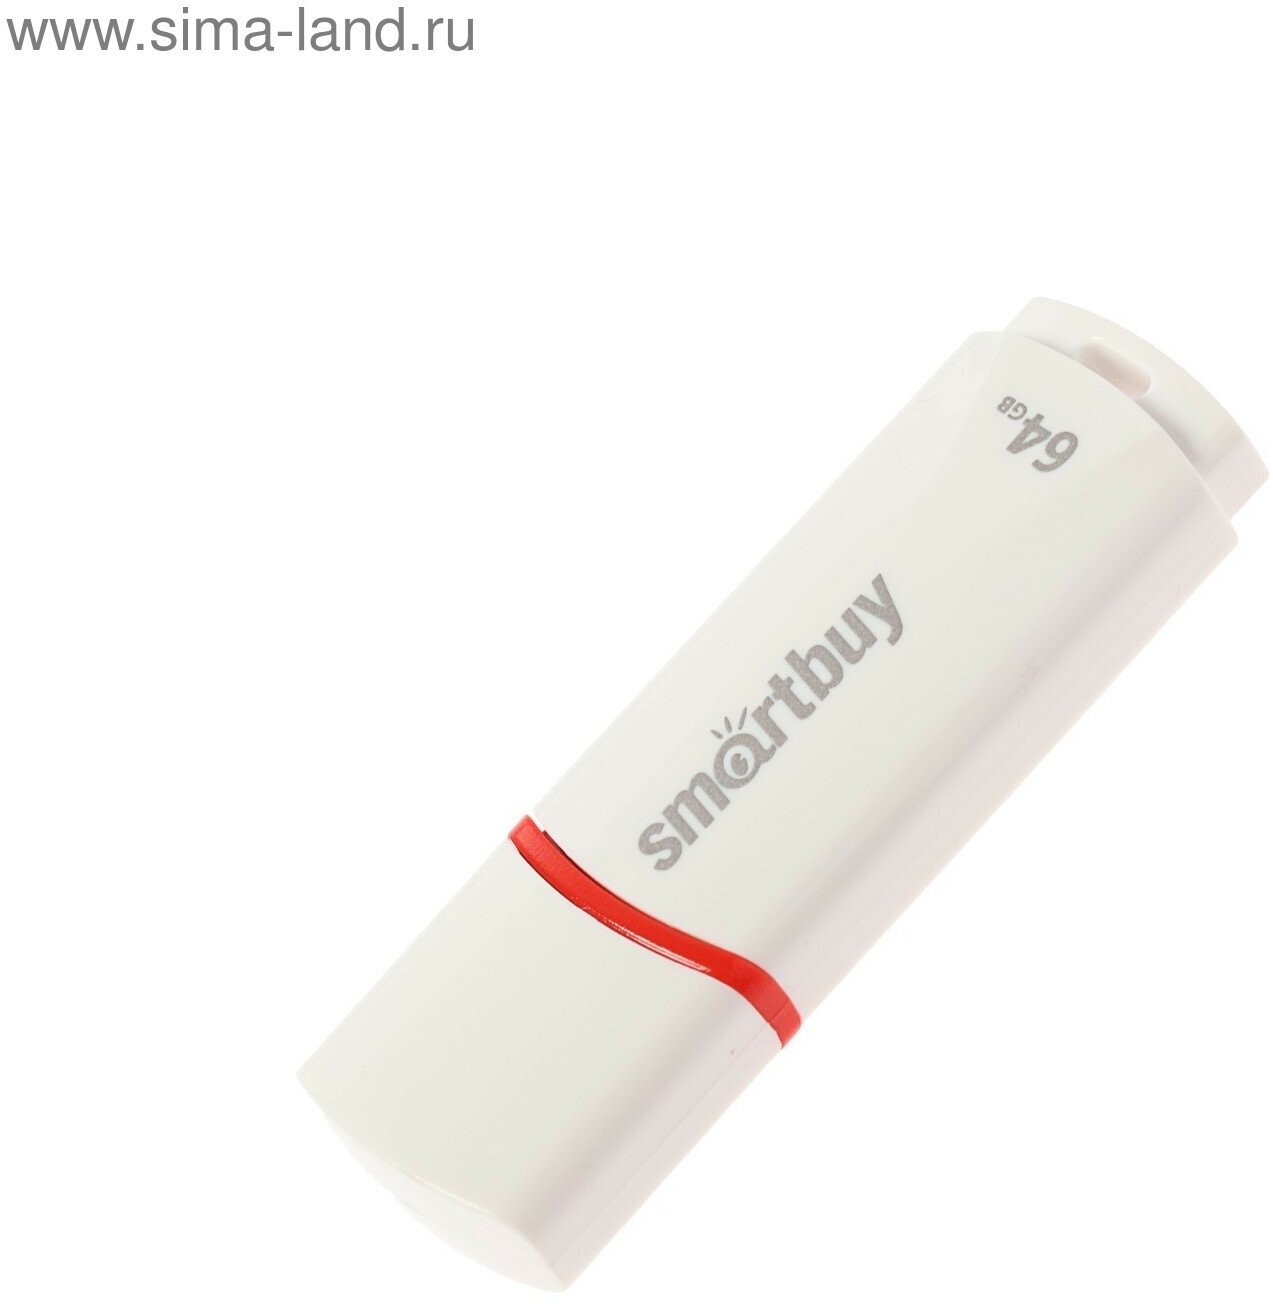 Флешка Smartbuy Crown White, 64 Гб, USB2.0, чт до 25 Мб/с, зап до 15 Мб/с, белая